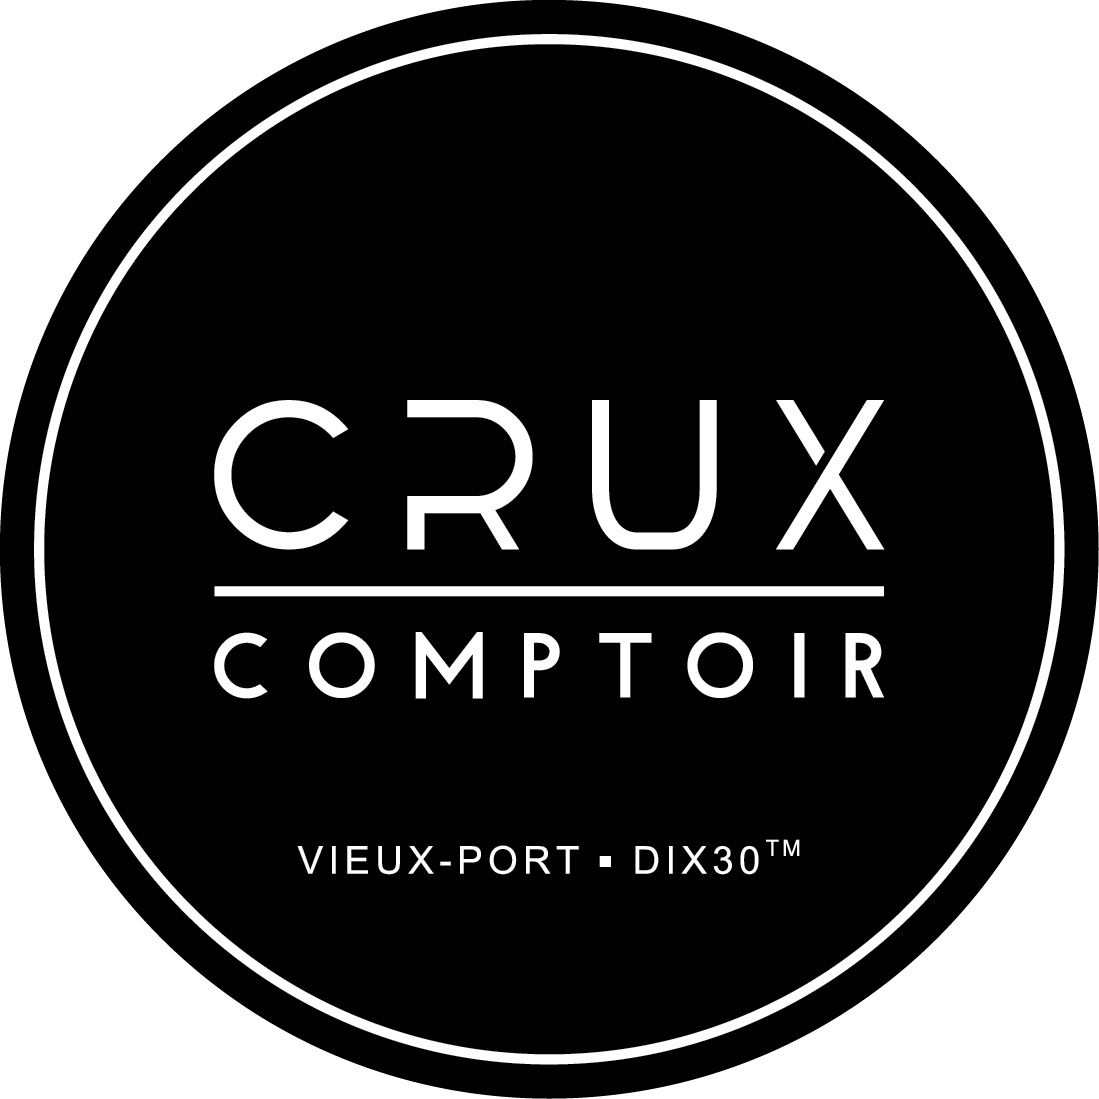 Crux comptoir